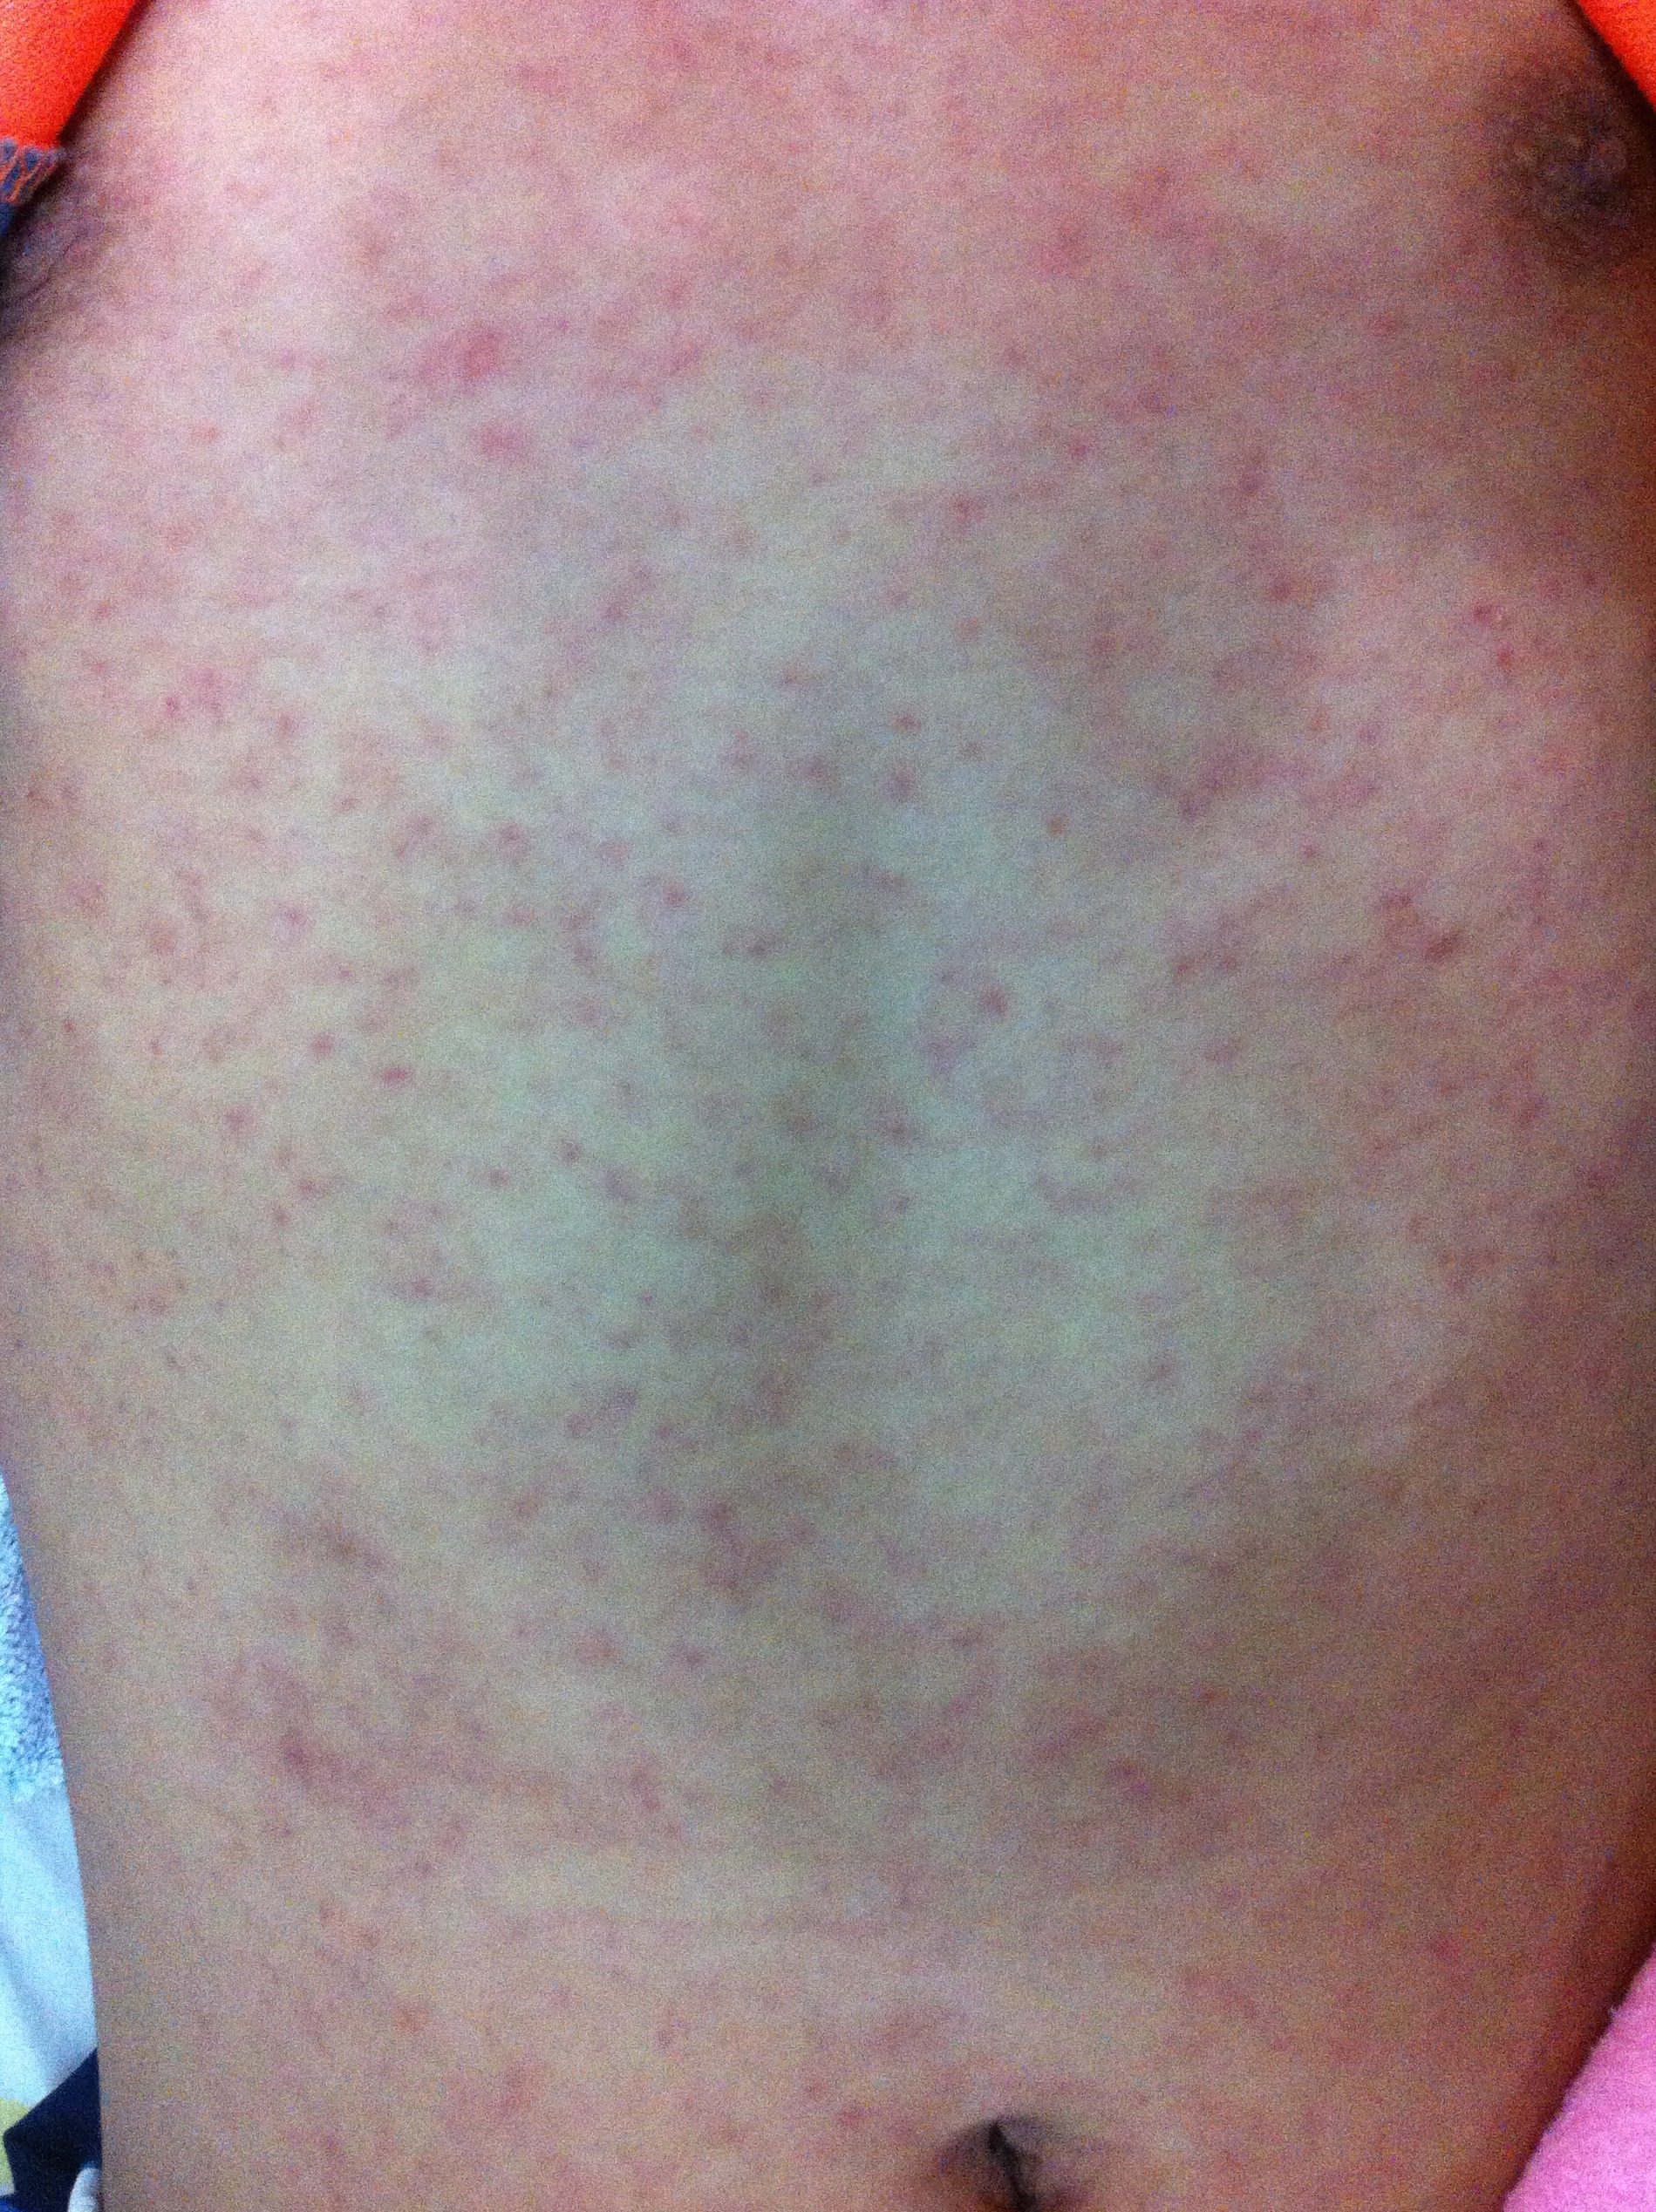 Maculopapular rash in the trunk